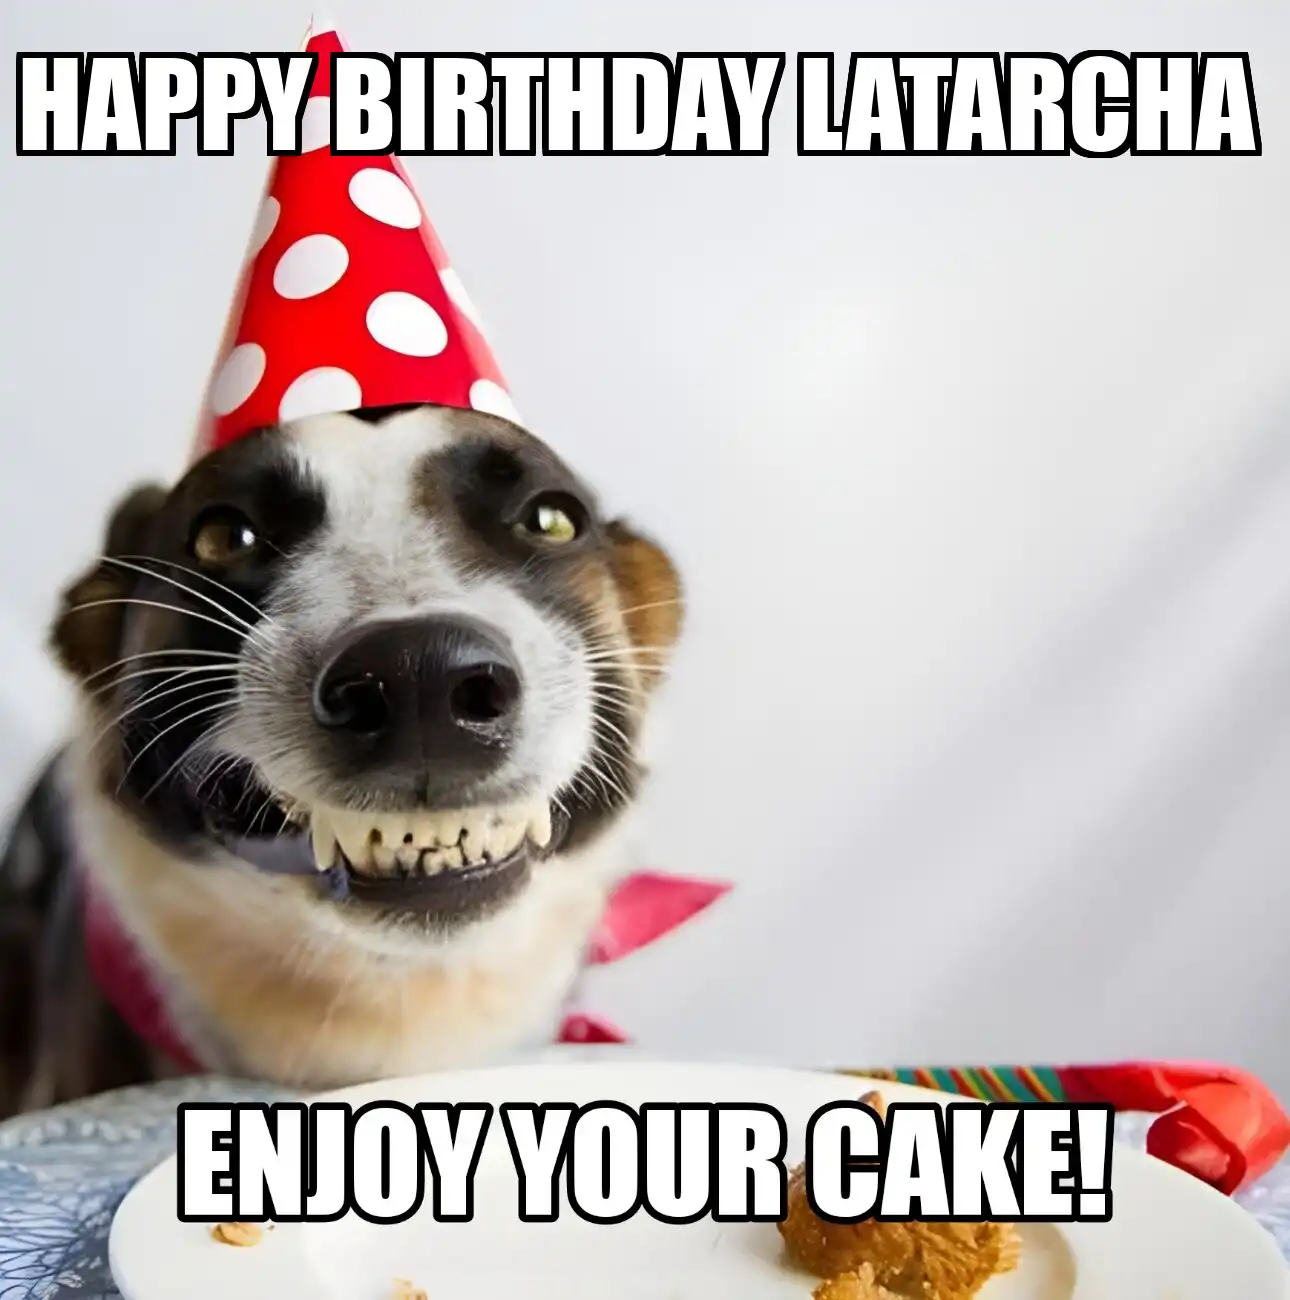 Happy Birthday Latarcha Enjoy Your Cake Dog Meme